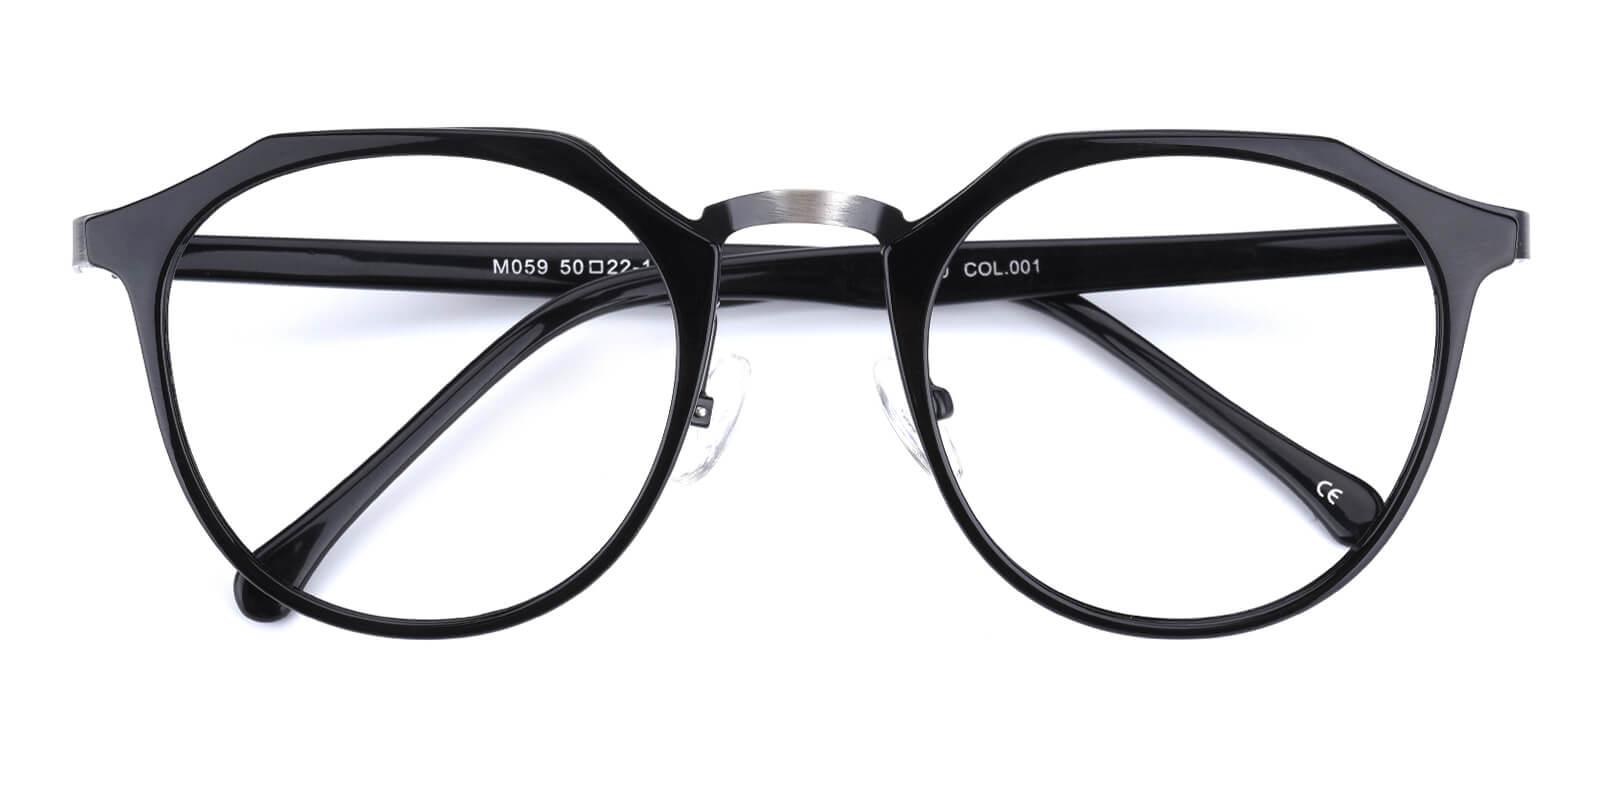 Intense-Black-Geometric-Combination / Metal / TR-Eyeglasses-detail